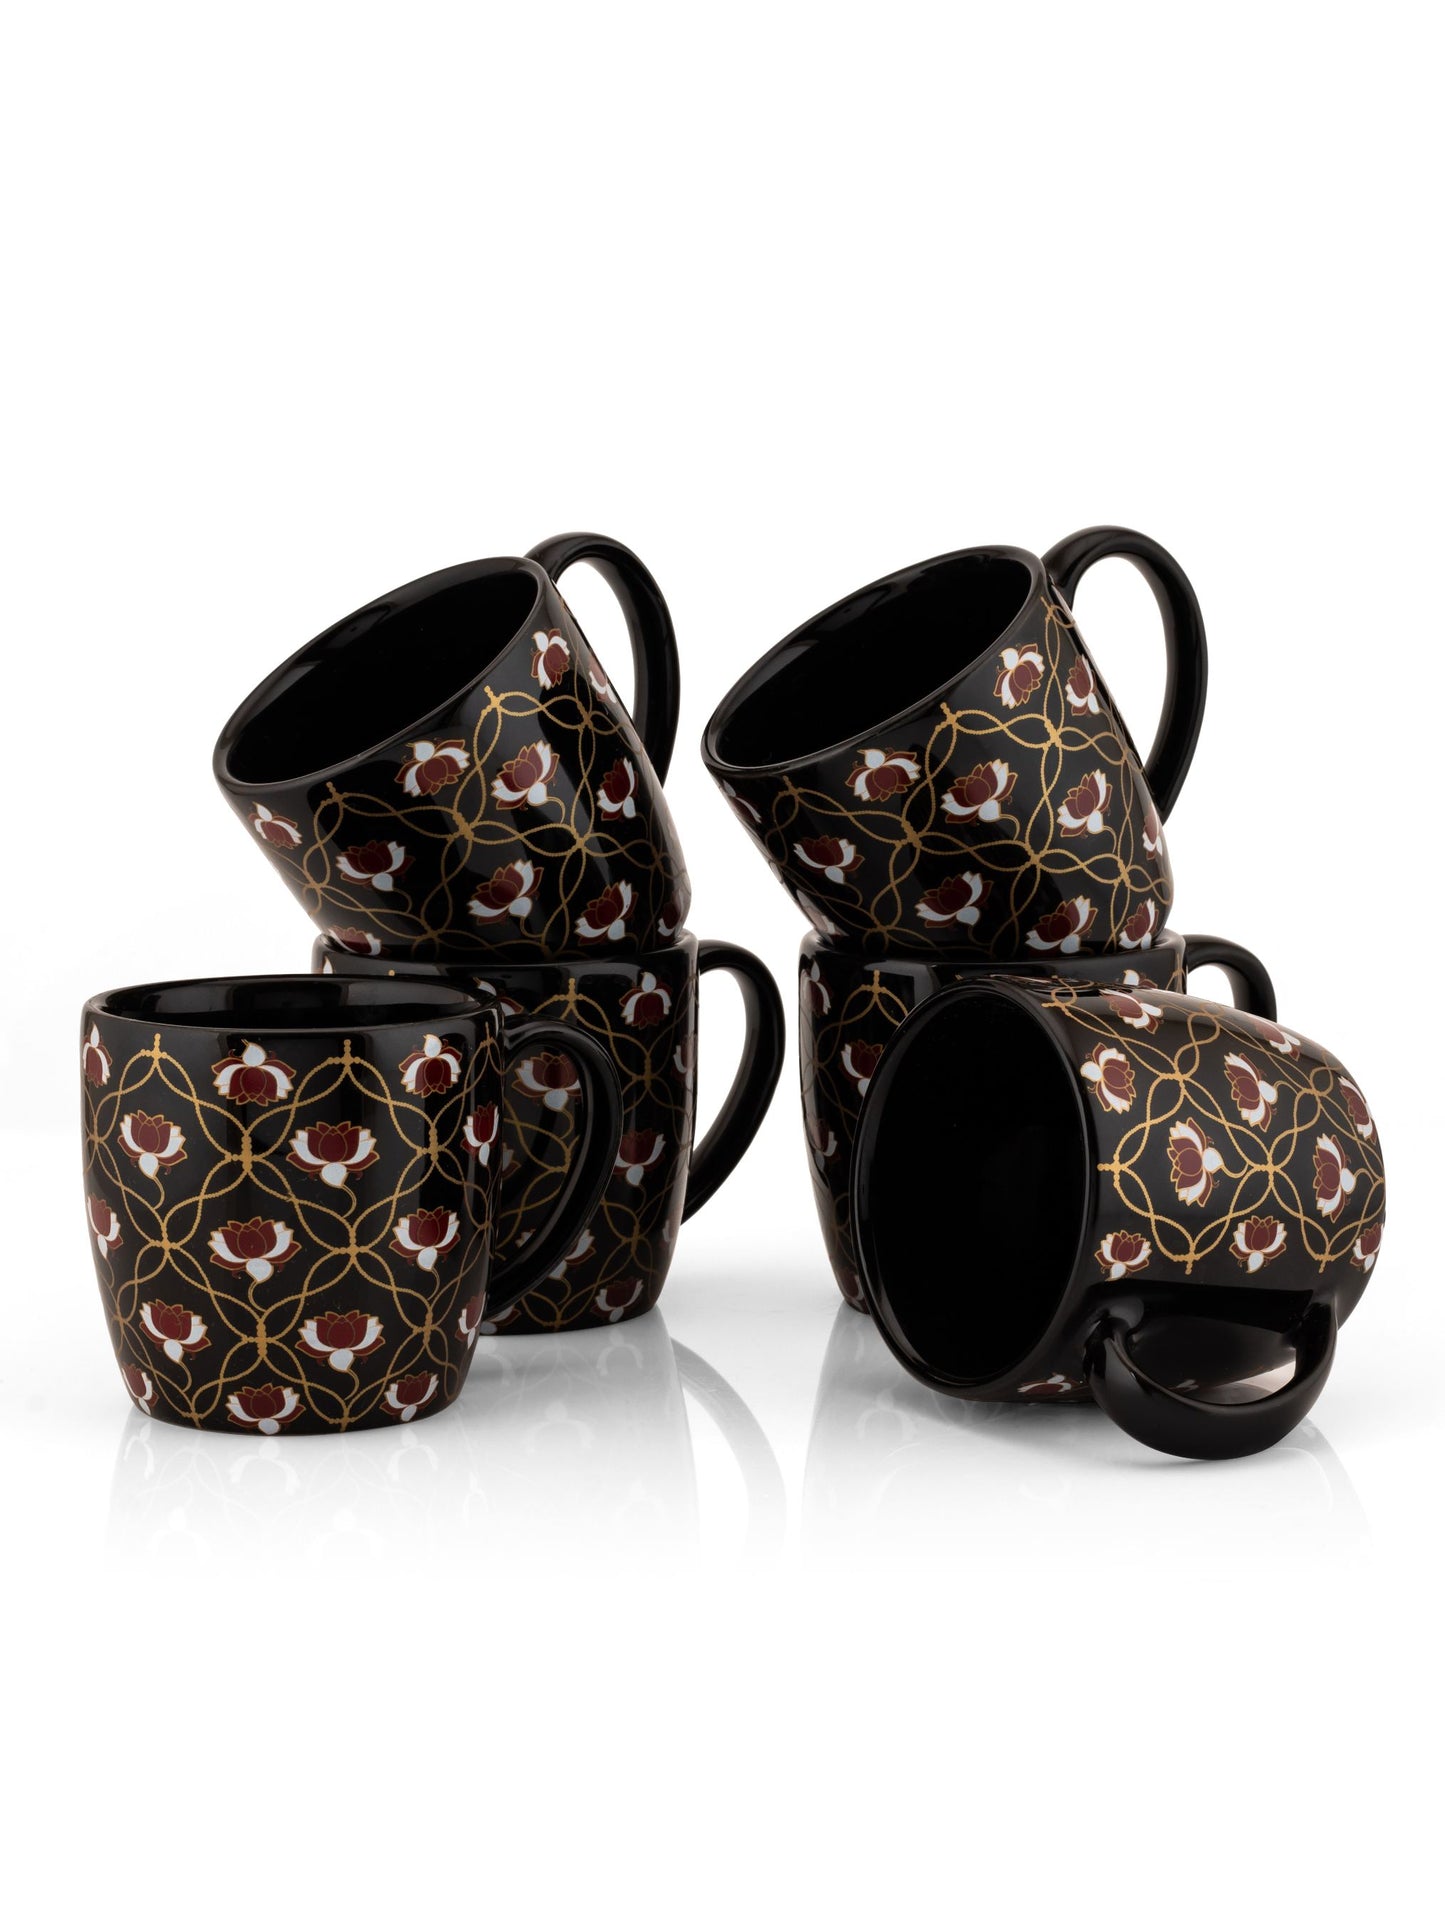 Alton Pebble Coffee & Tea Mugs, 200ml, Set of 6 (B302)